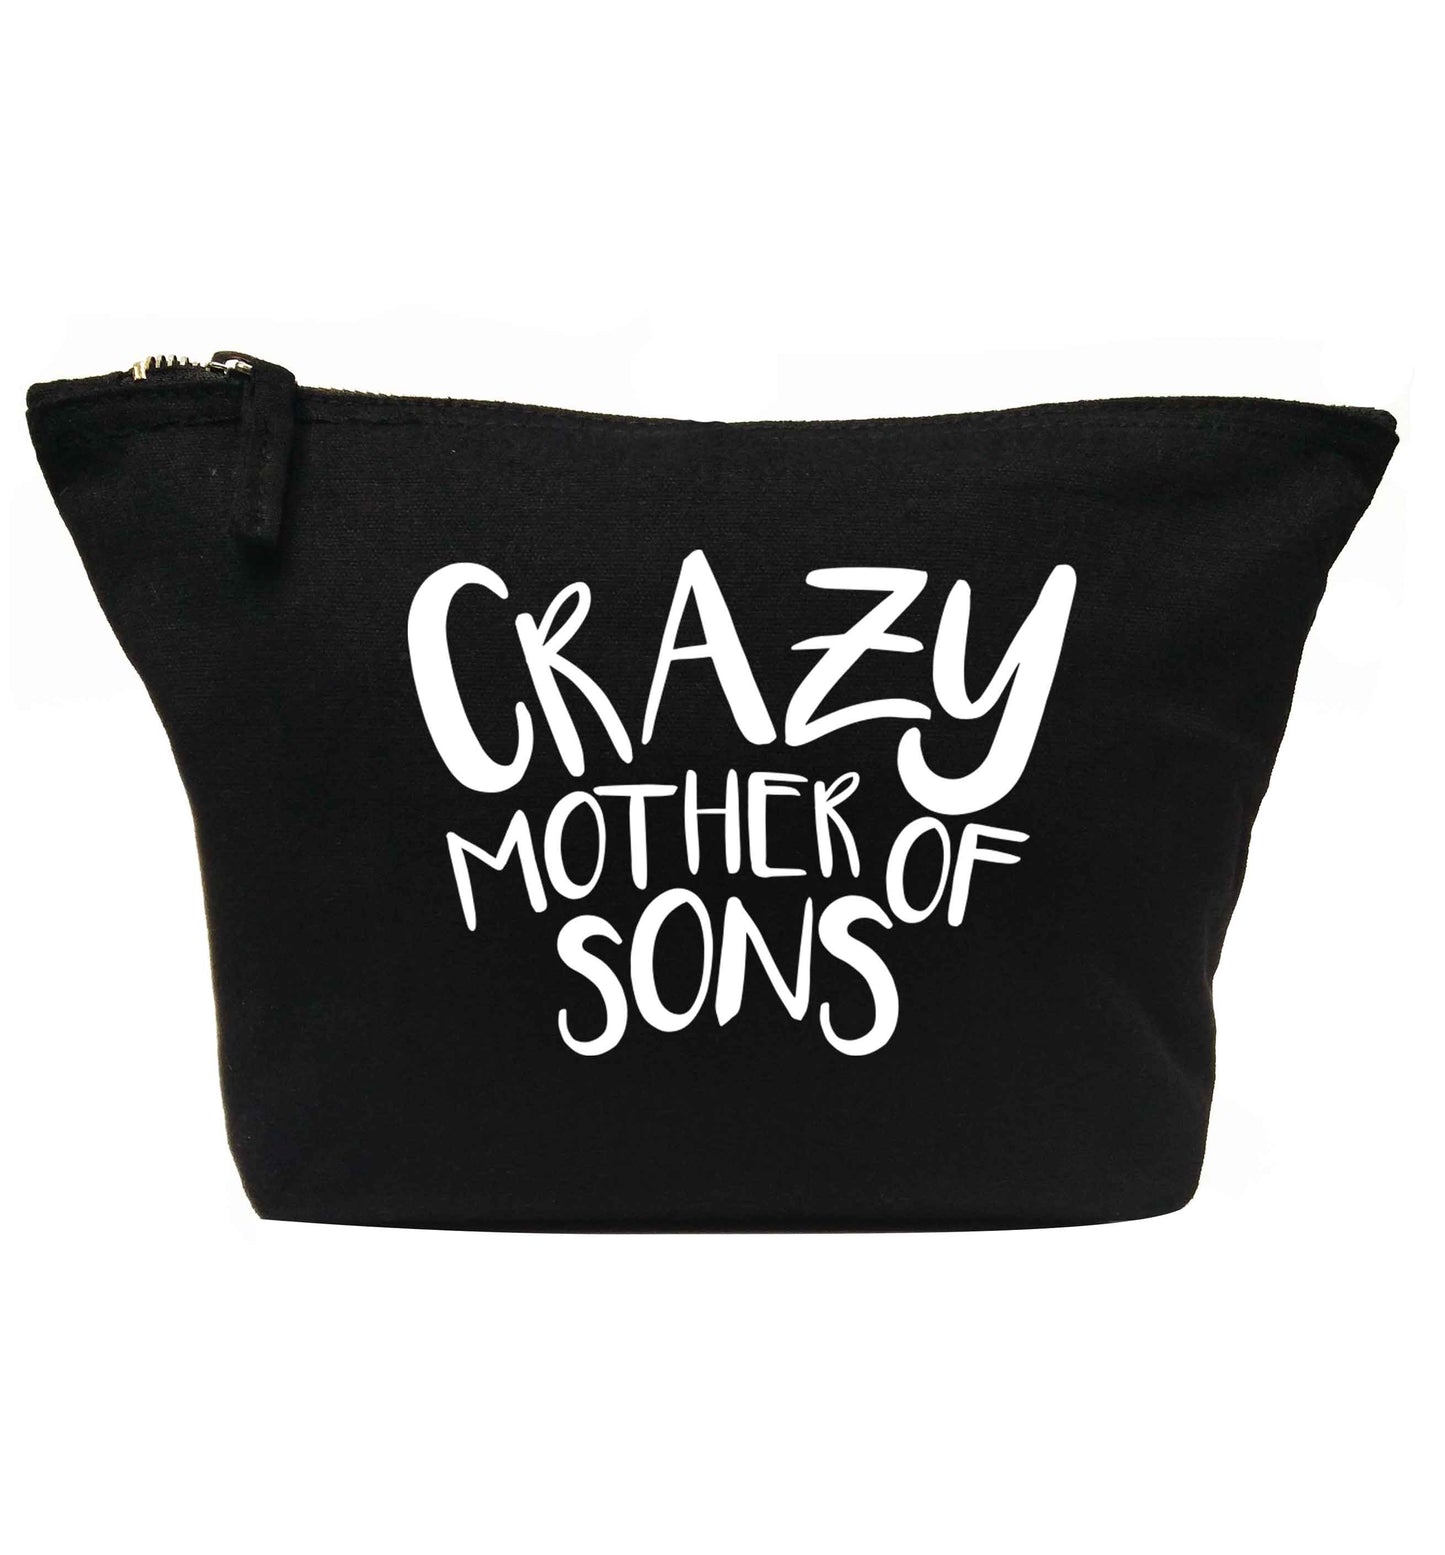 Crazy mother of sons | Makeup / wash bag